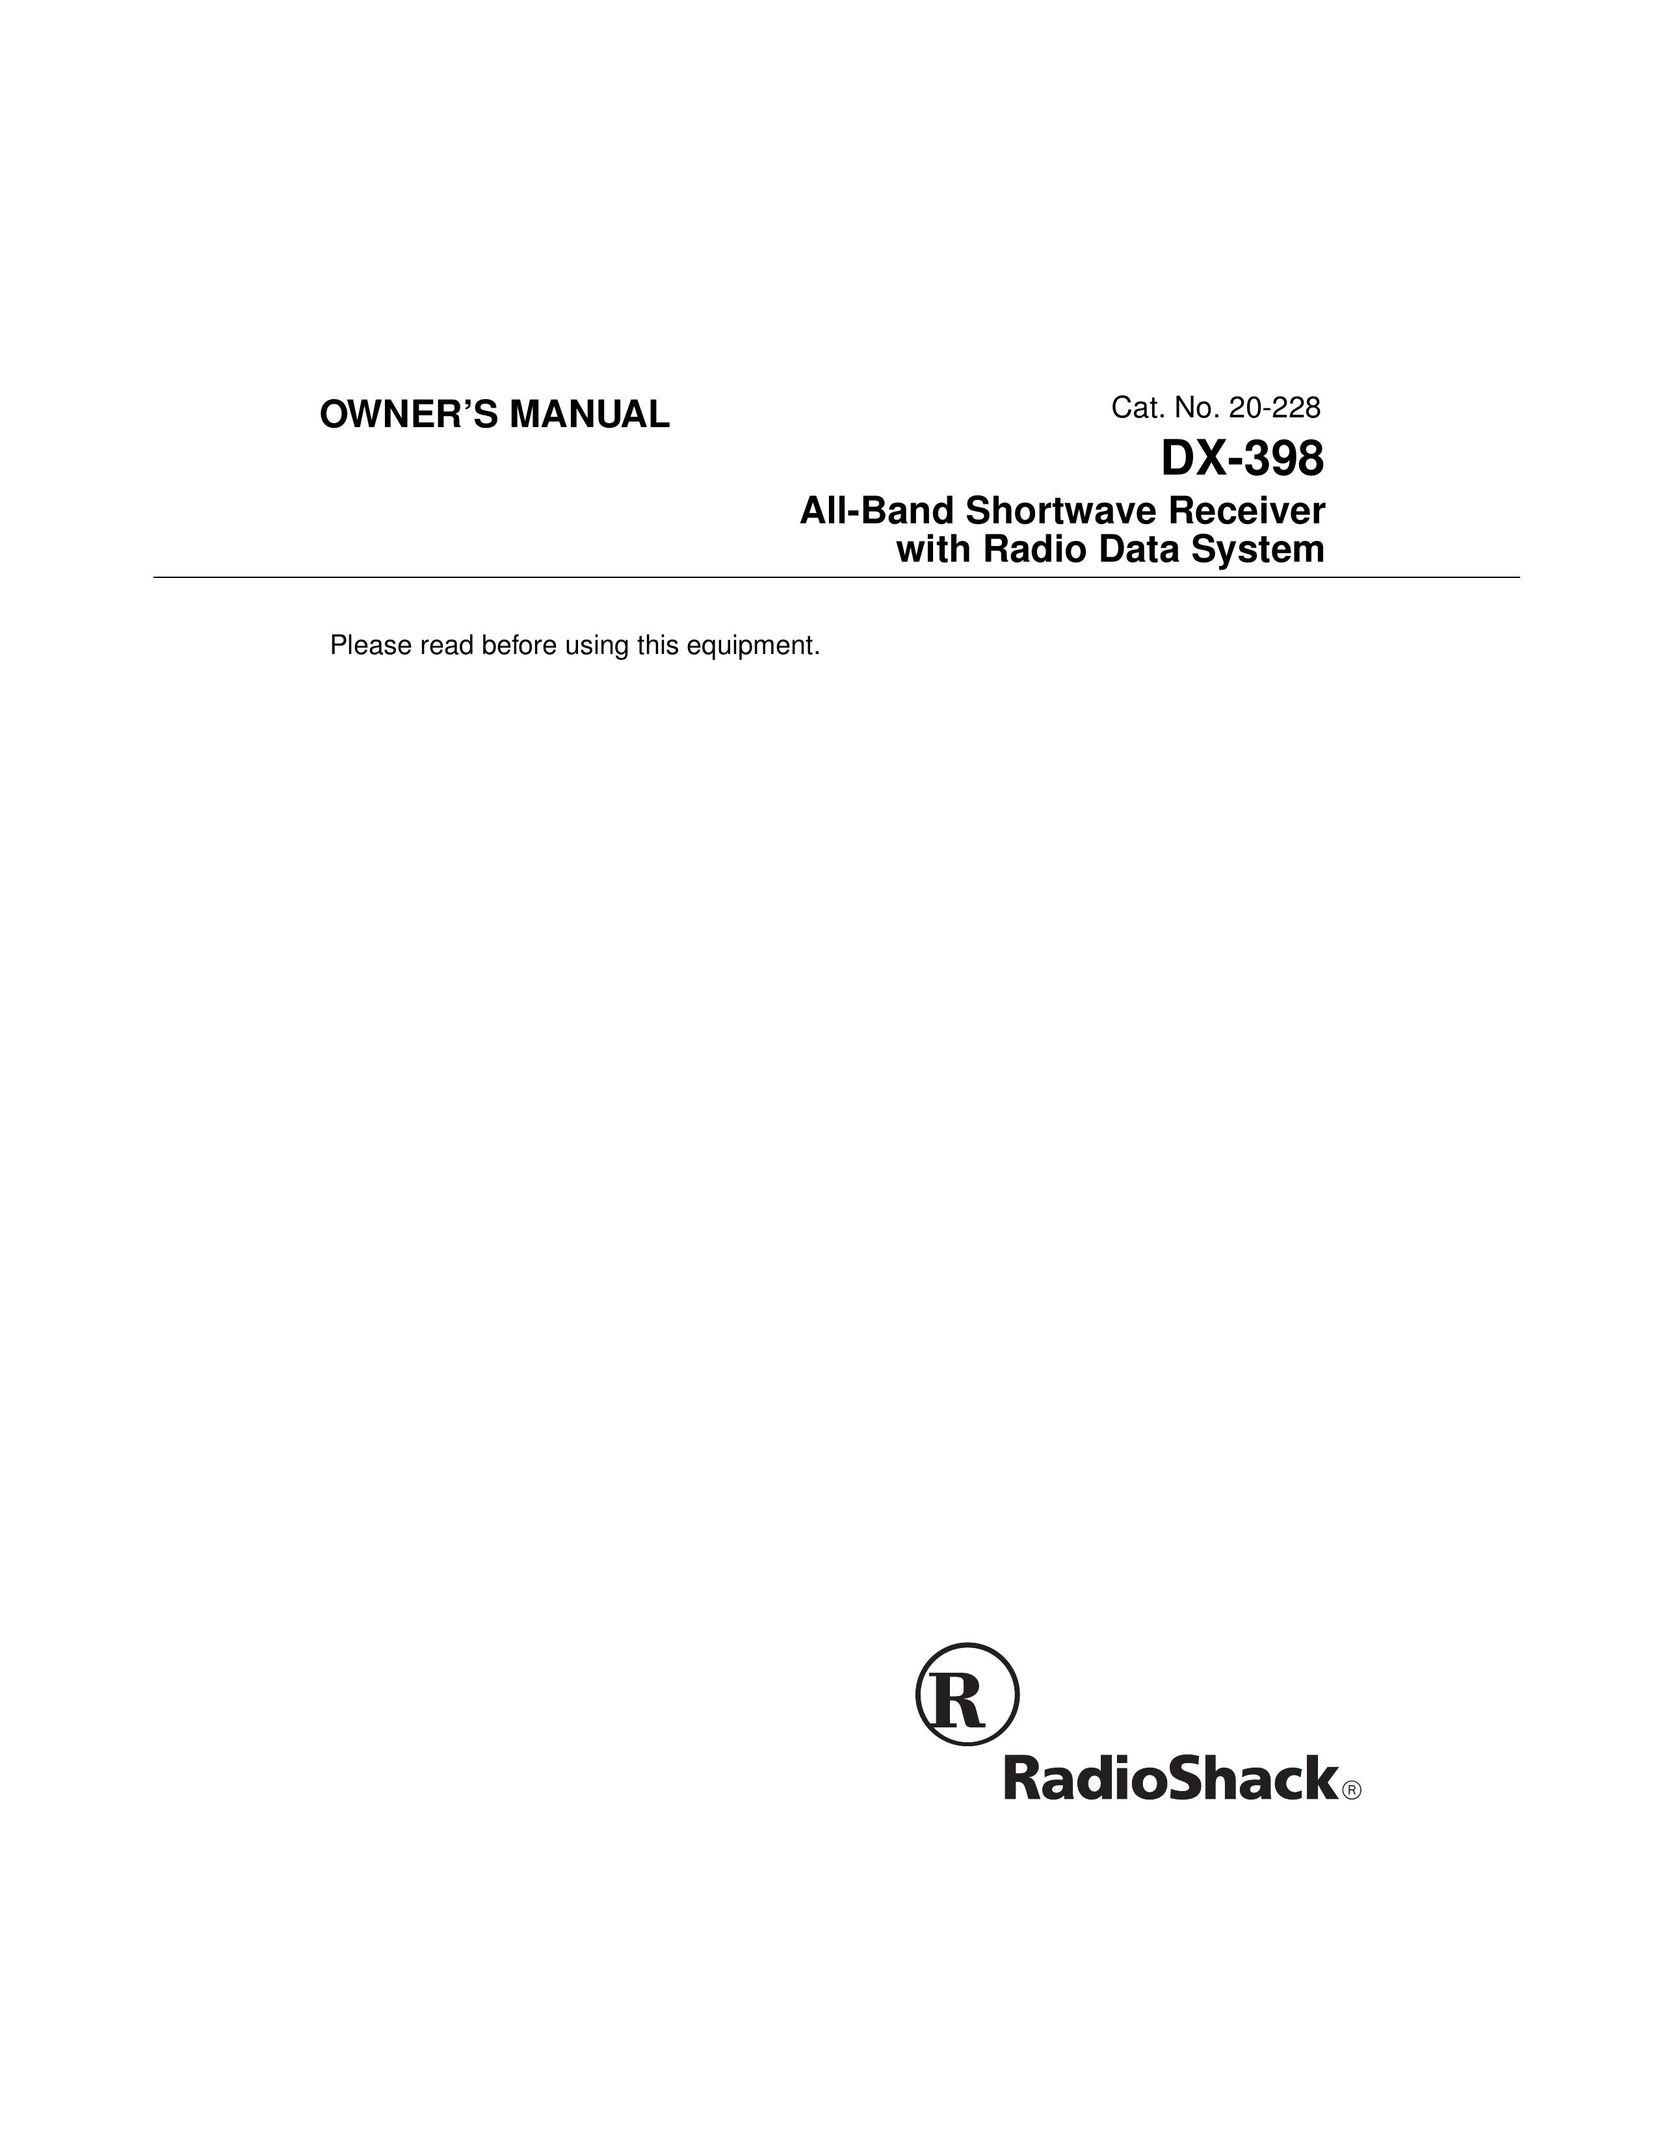 Radio Shack DX-398 Satellite Radio User Manual